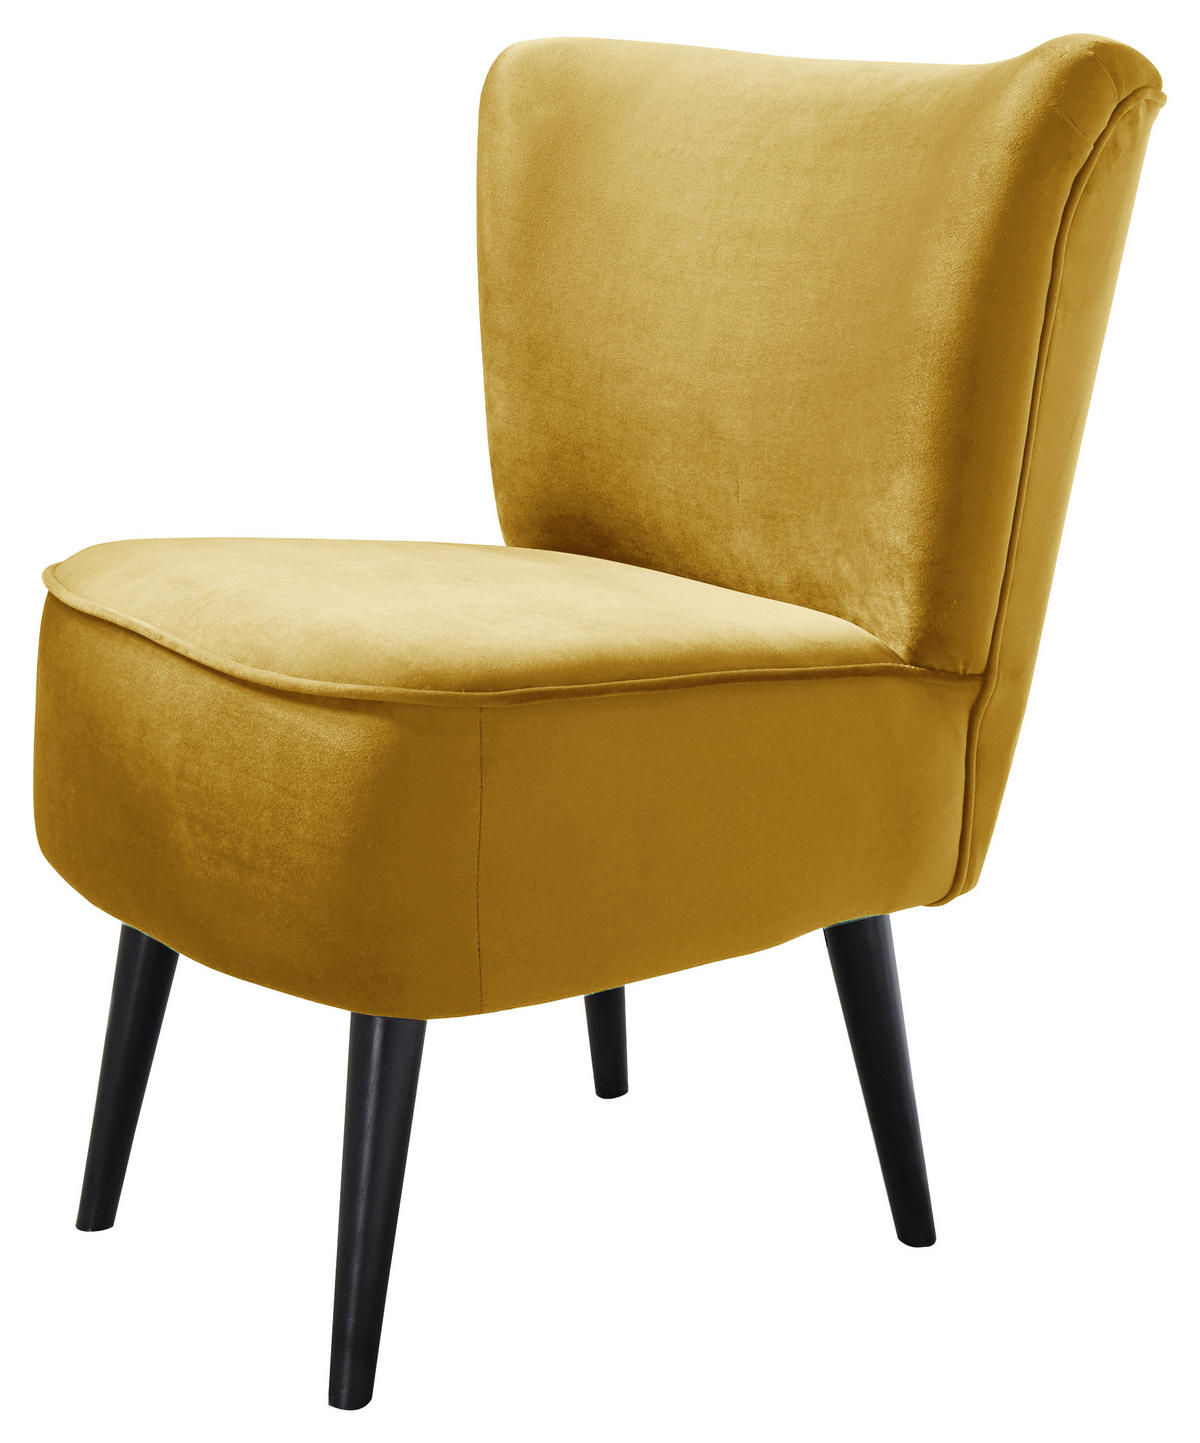 Retro-Looks Sessel Moderne shoppen Goldfarben: in